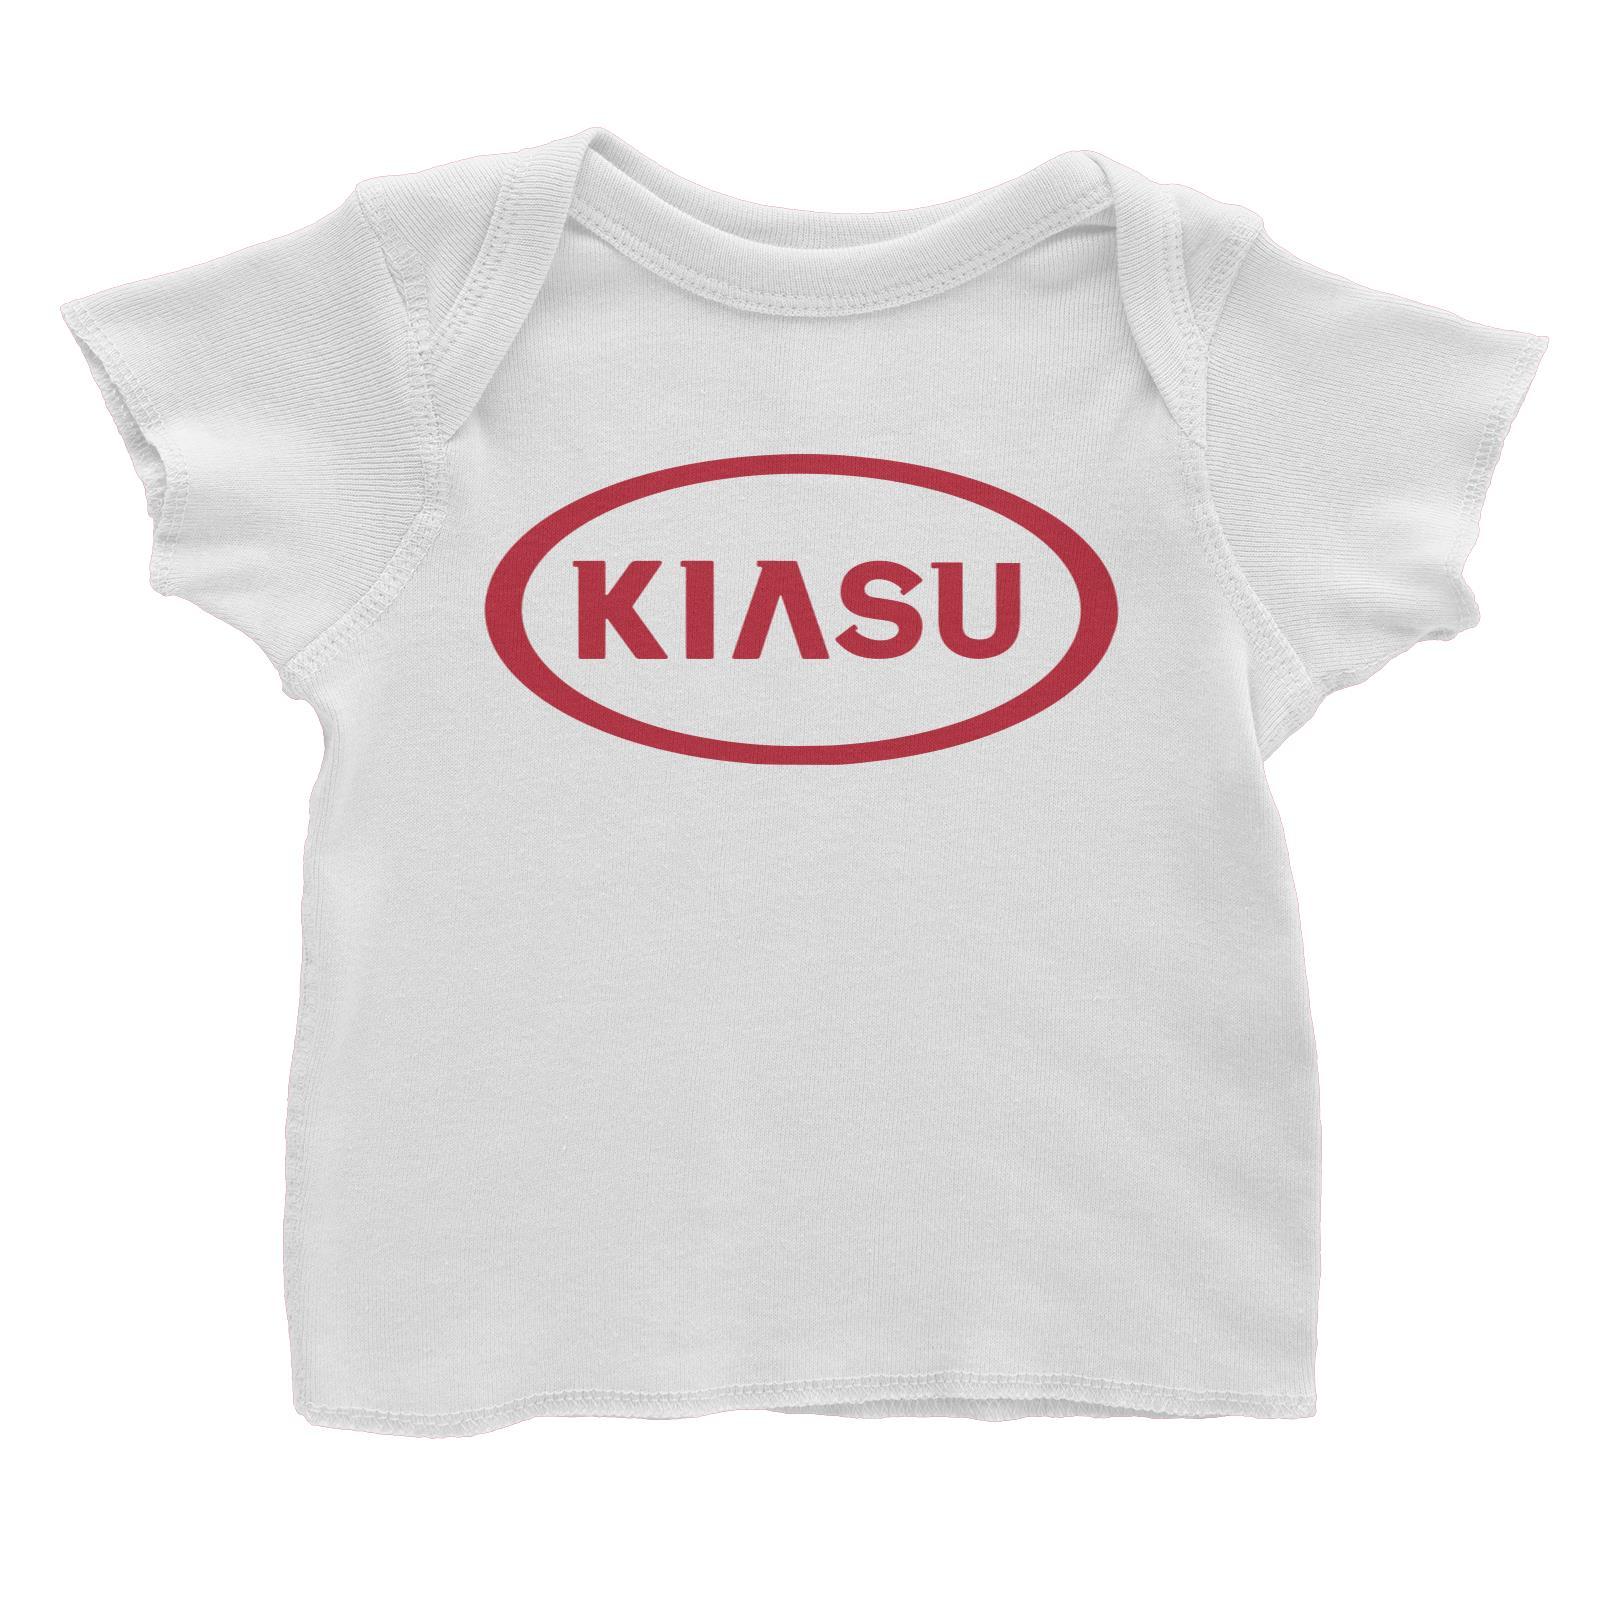 Slang Statement Kiasu Baby T-Shirt